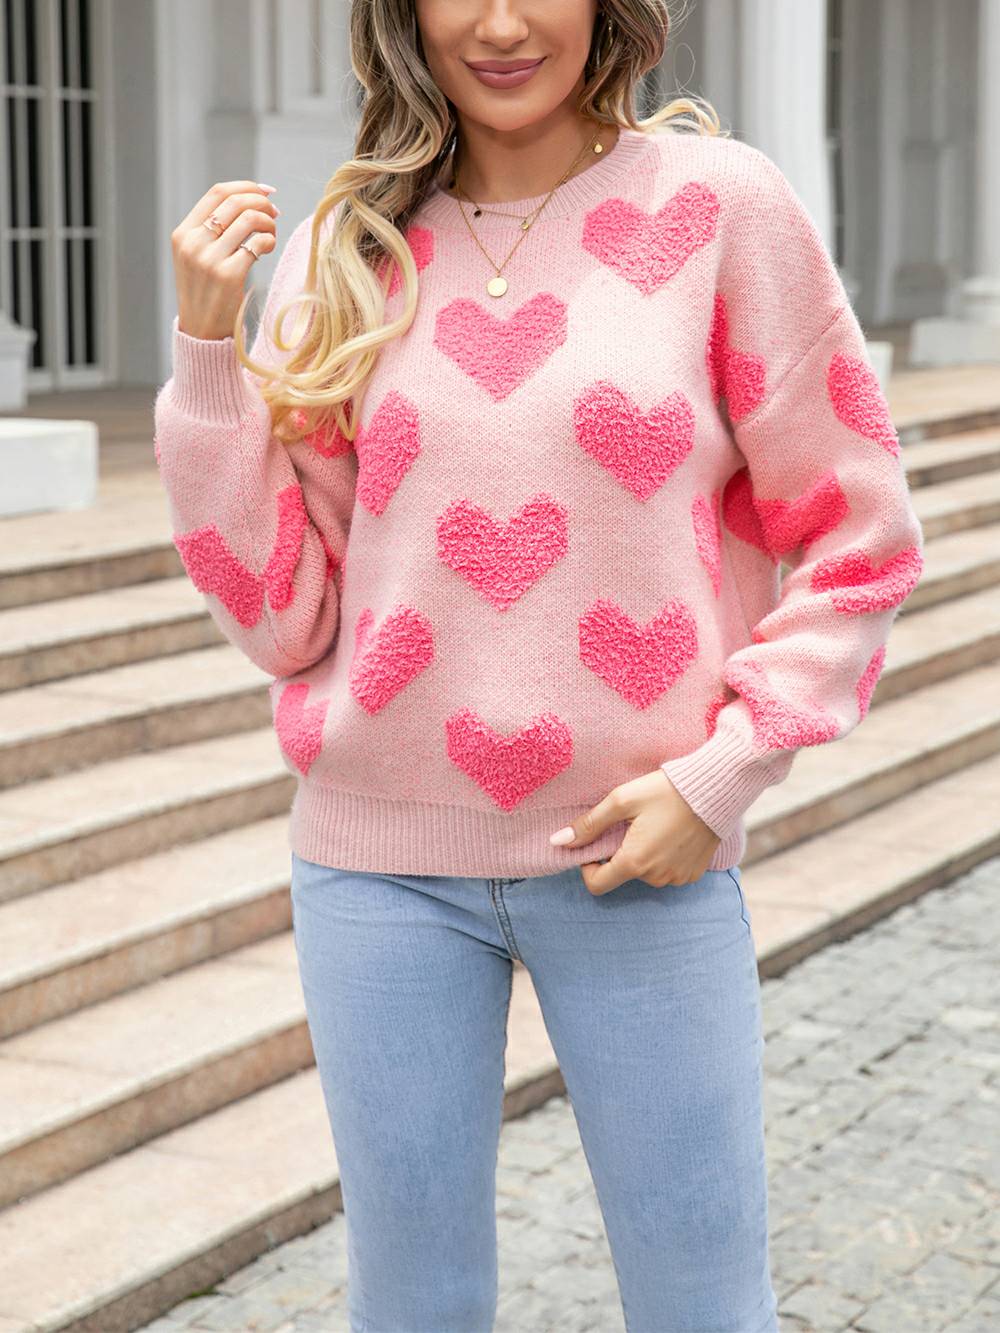 प्यार के छोटे दिल बुना स्वेटर